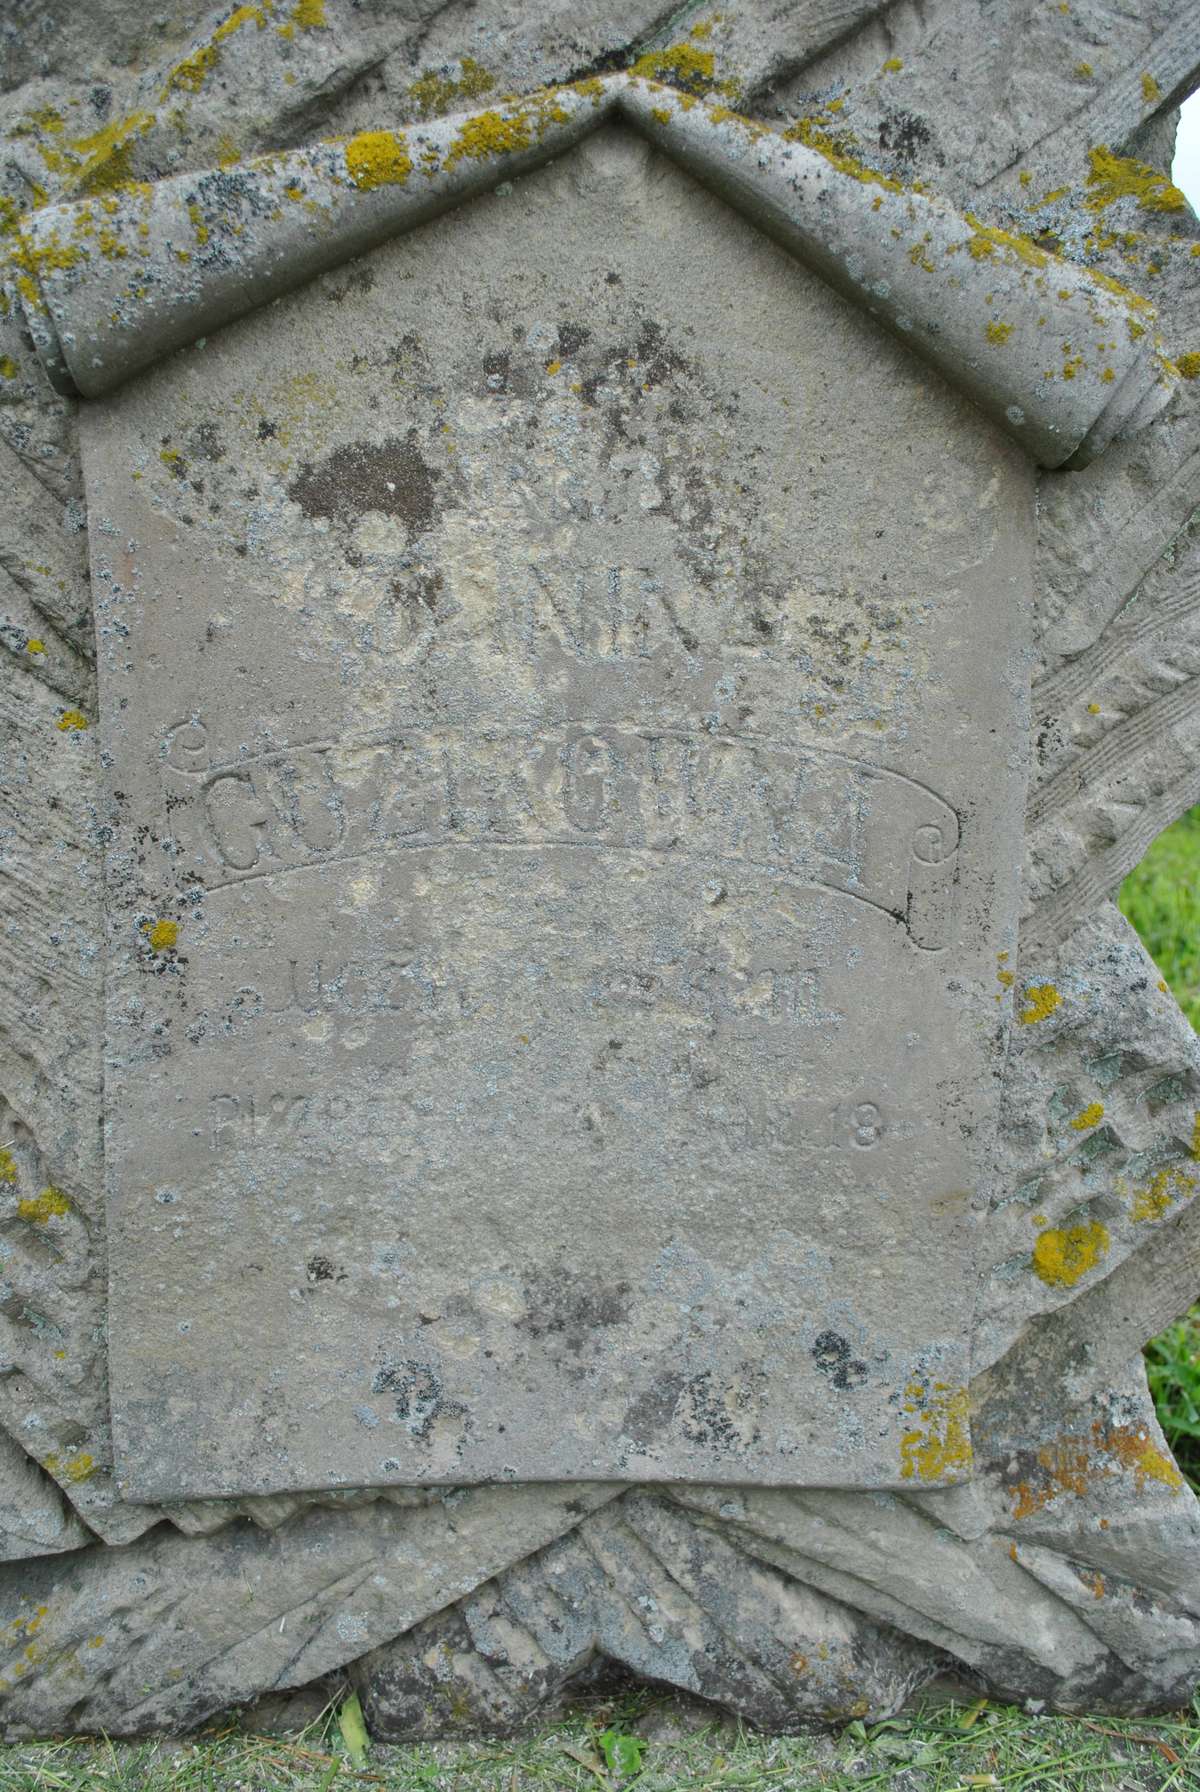 Inscription from the gravestone of Maria Janina Guzik, cemetery in Hlubochok Wielki